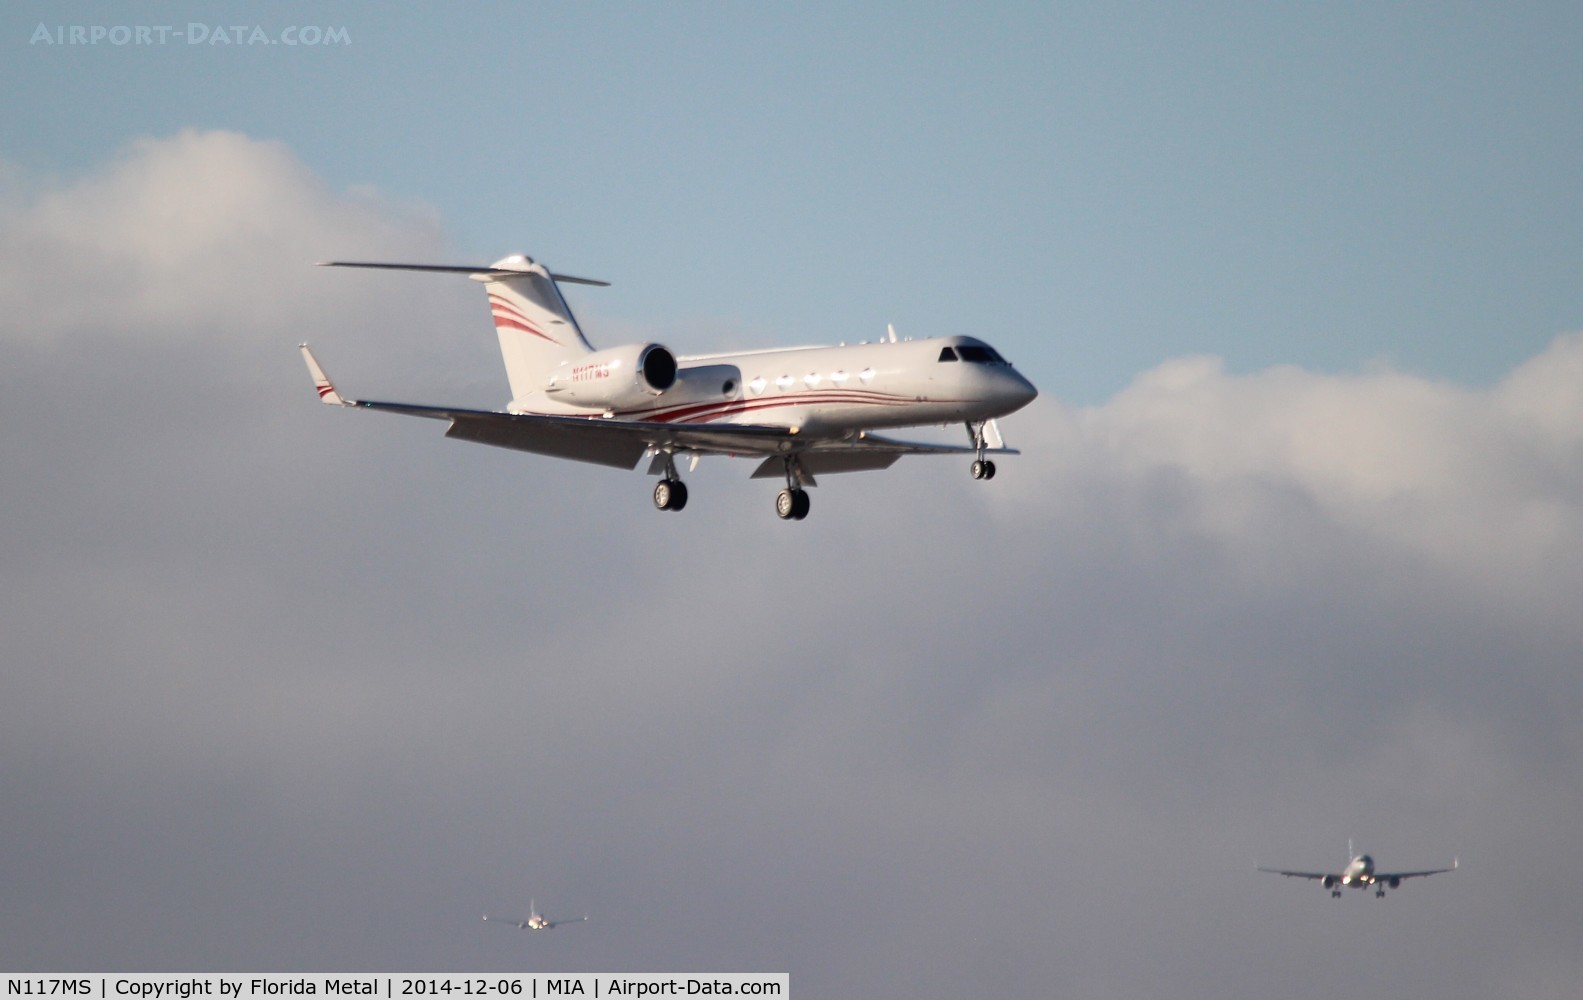 N117MS, 1994 Gulfstream Aerospace G-IV C/N 1241, Gulfstream IV landing Runway 26L with aircraft on approach for 12